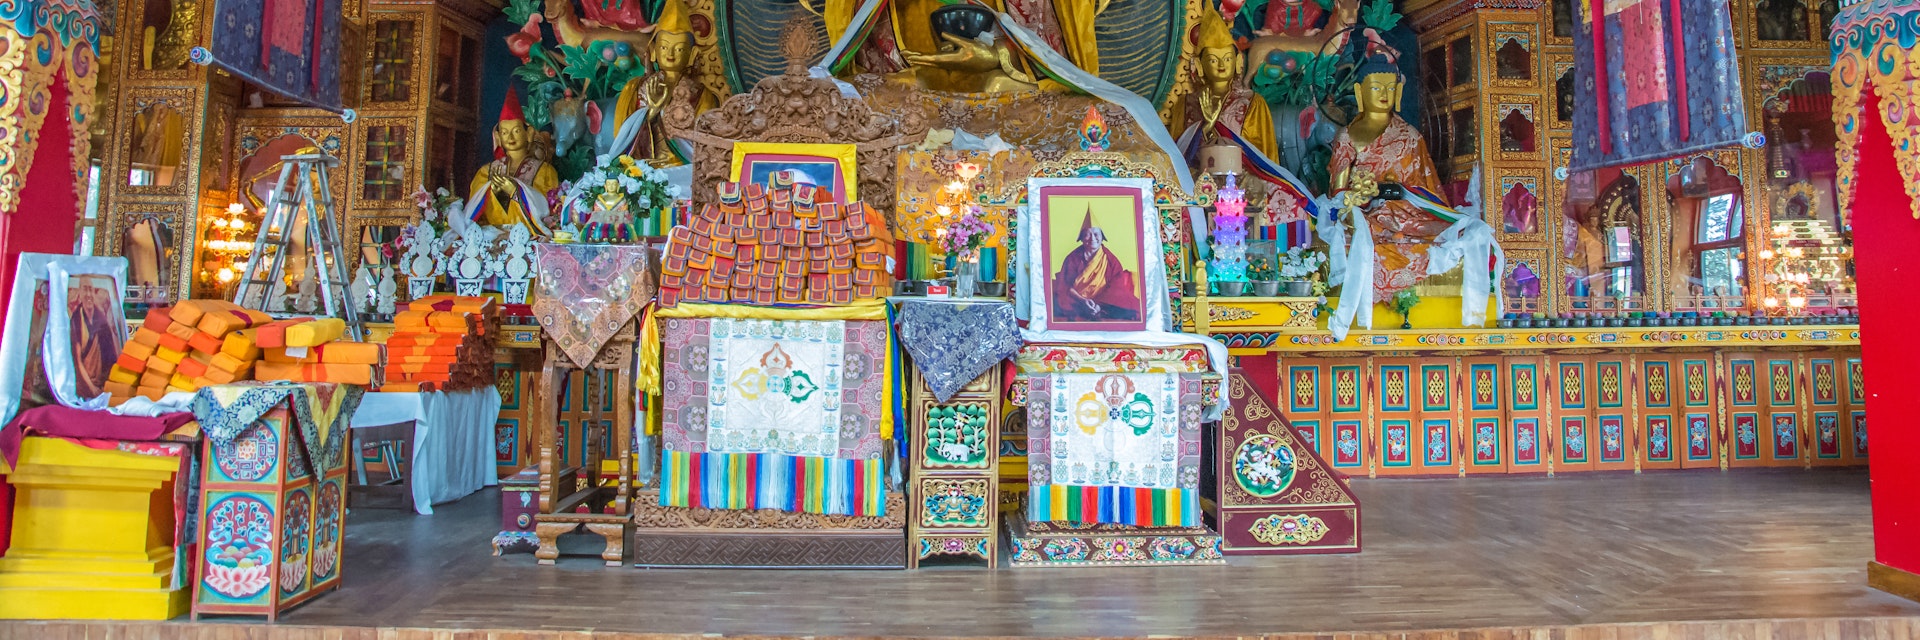 Inside the main temple of Kopan monastery.